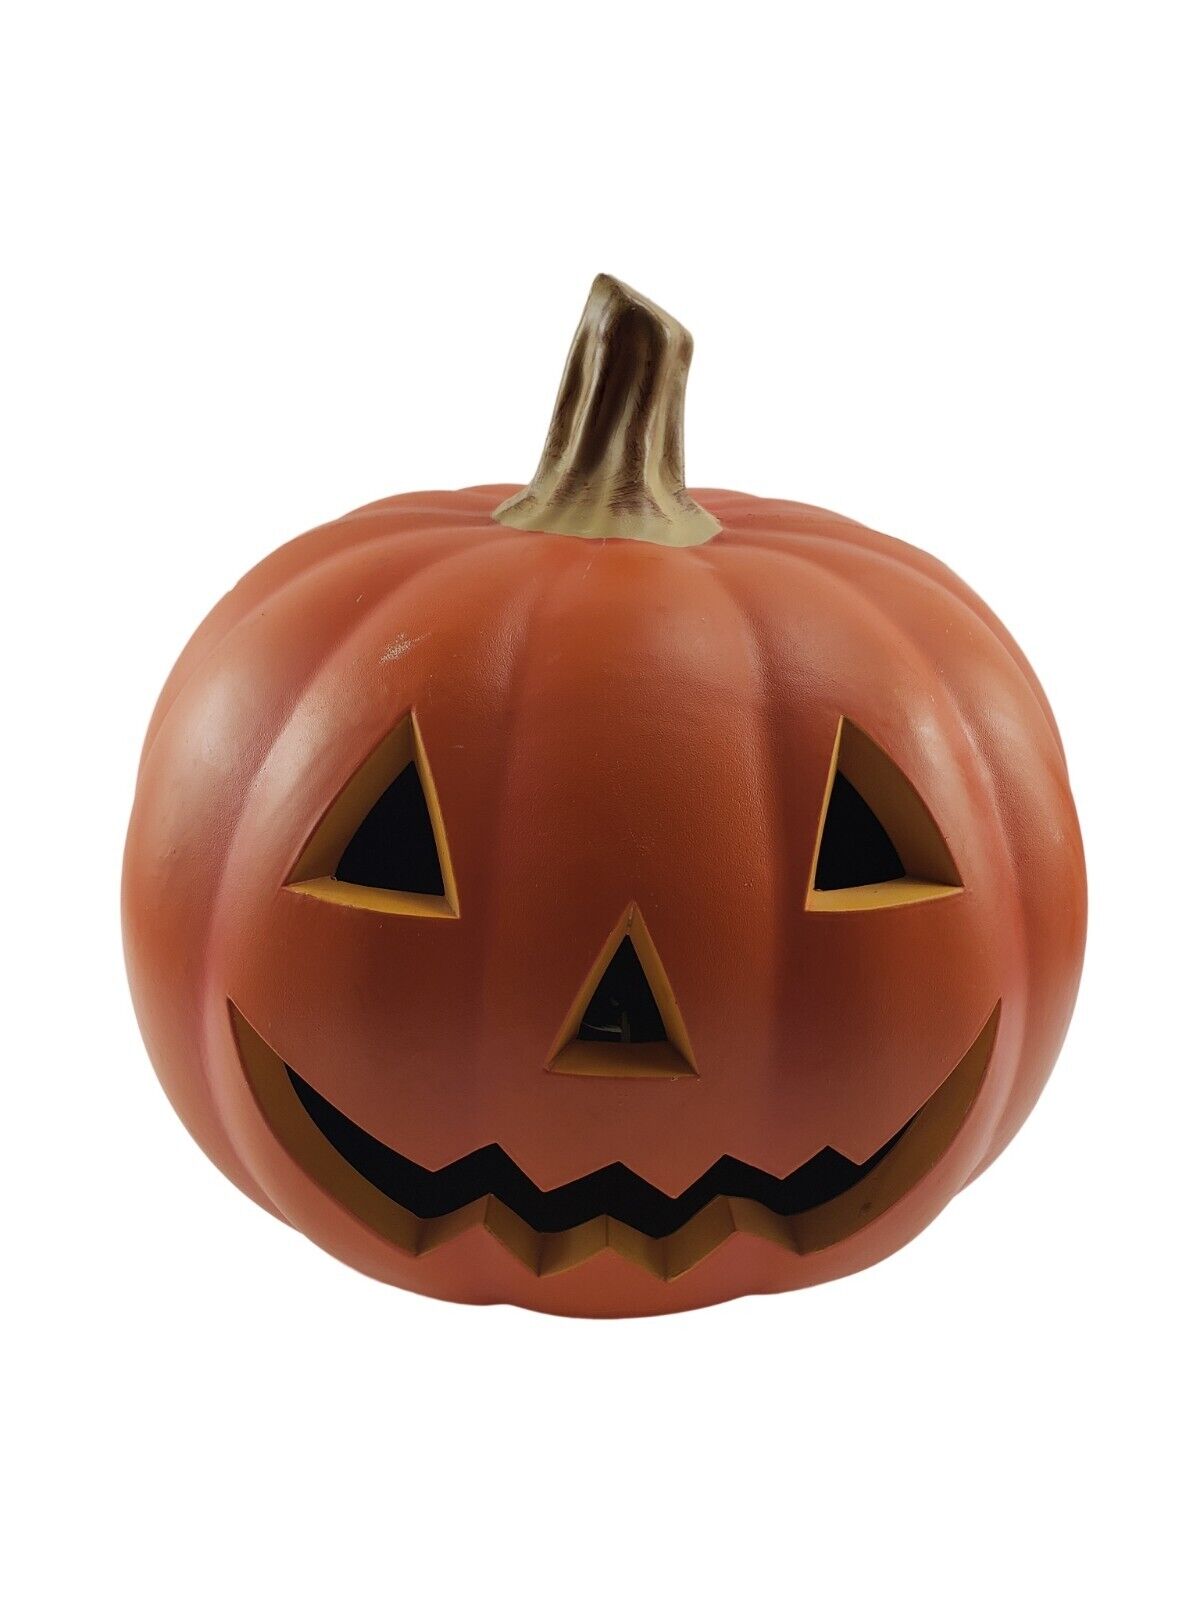 2018 Target Halloween Pumpkin Jack-o-Lantern Light Blow Mold Large 17 Inch 